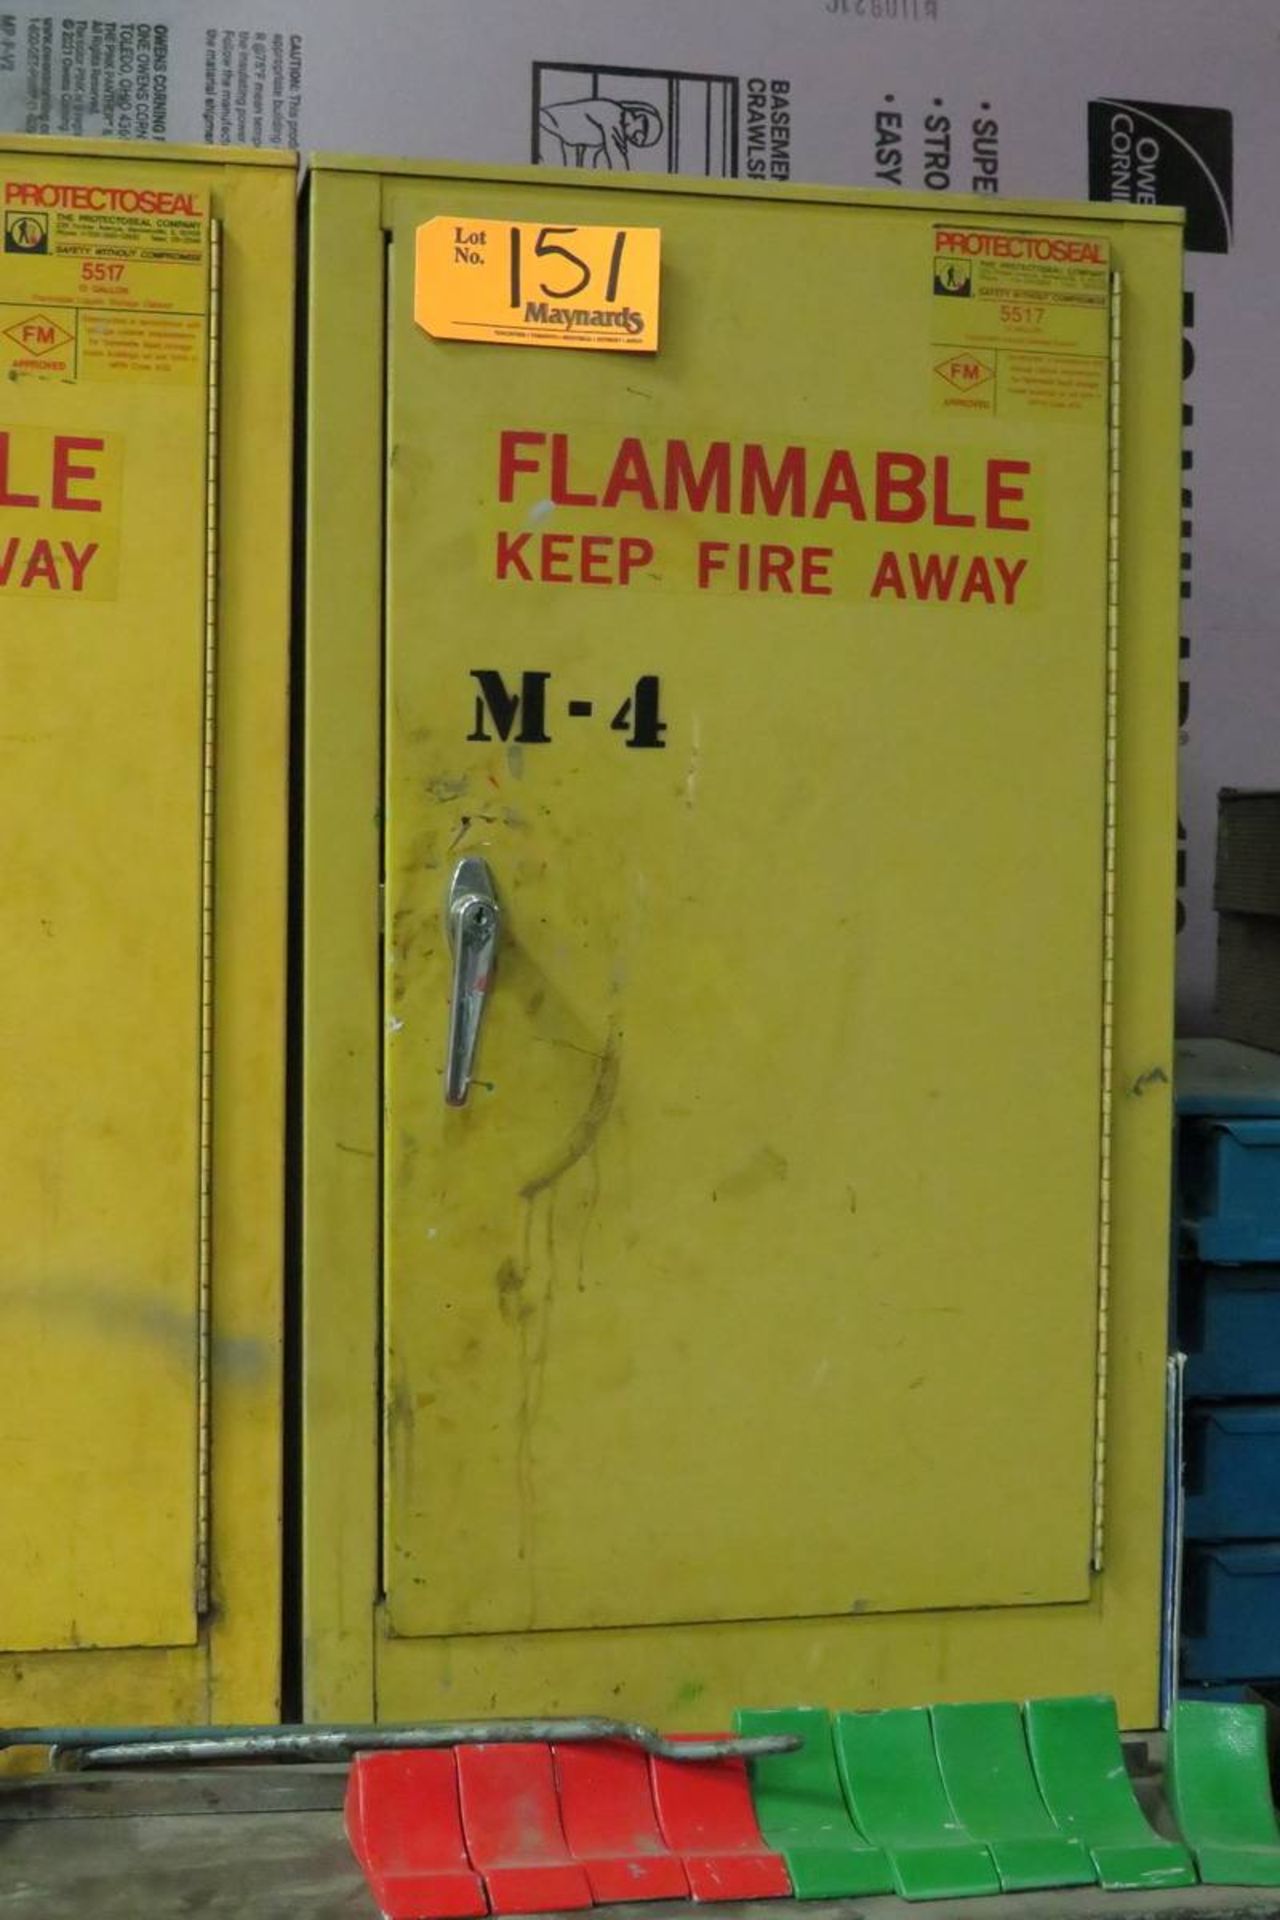 Protectoseal 5517 Flammable Liquid Storage Cabinet